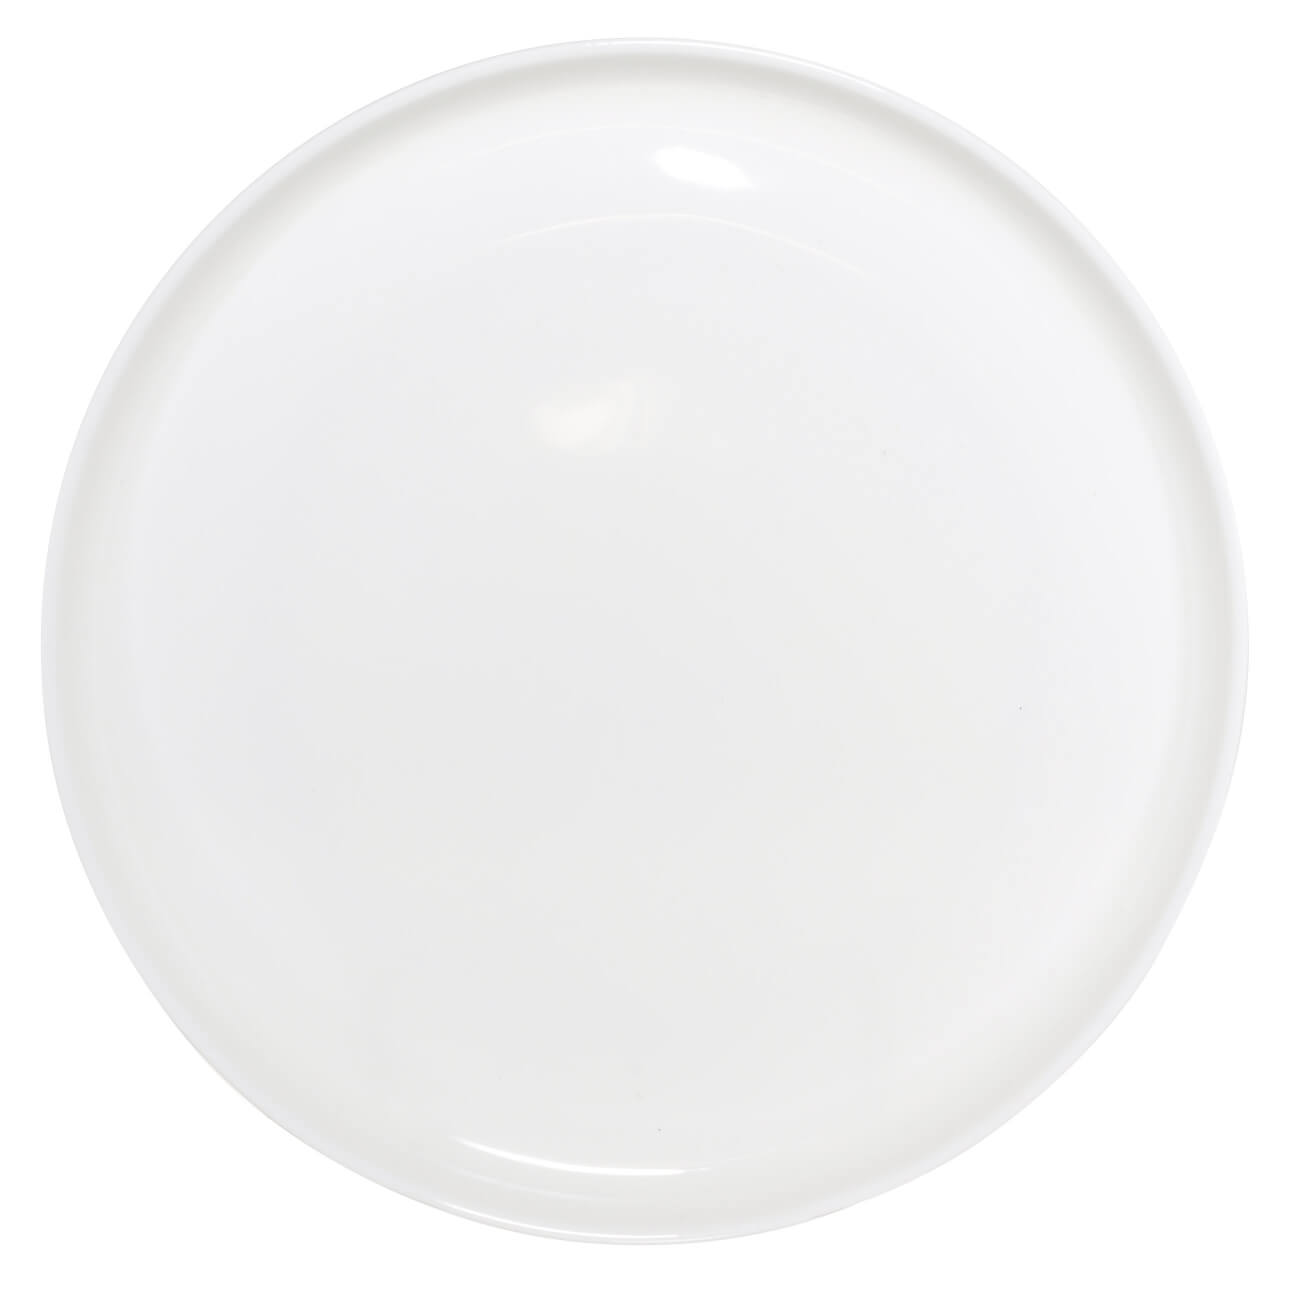 Dining plate, 26 cm, porcelain F, white, Ideal white изображение № 1